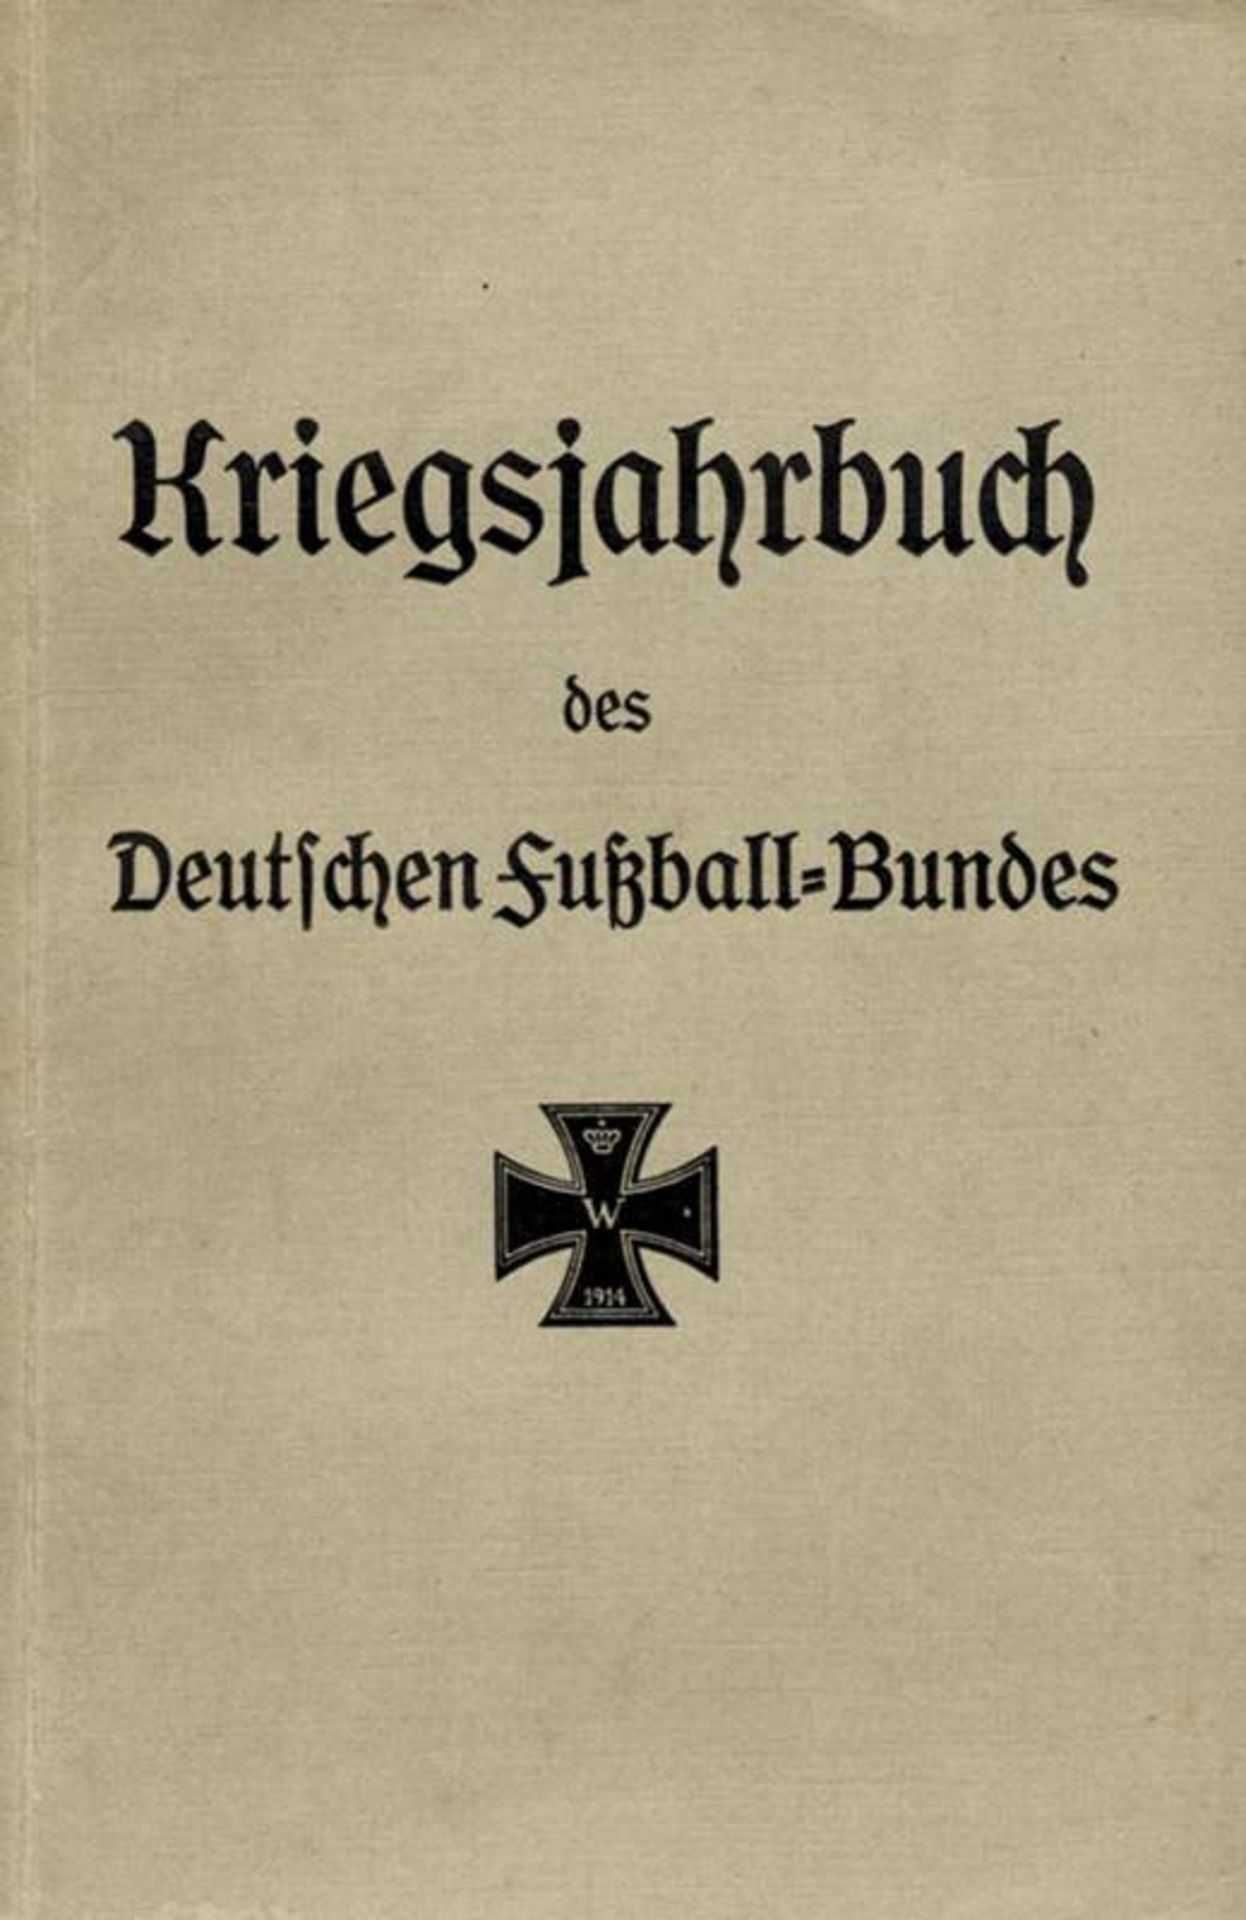 German Football Yearbook 1915 - War Annual of the German FA 1915, 11th edition.(GERMAN). 